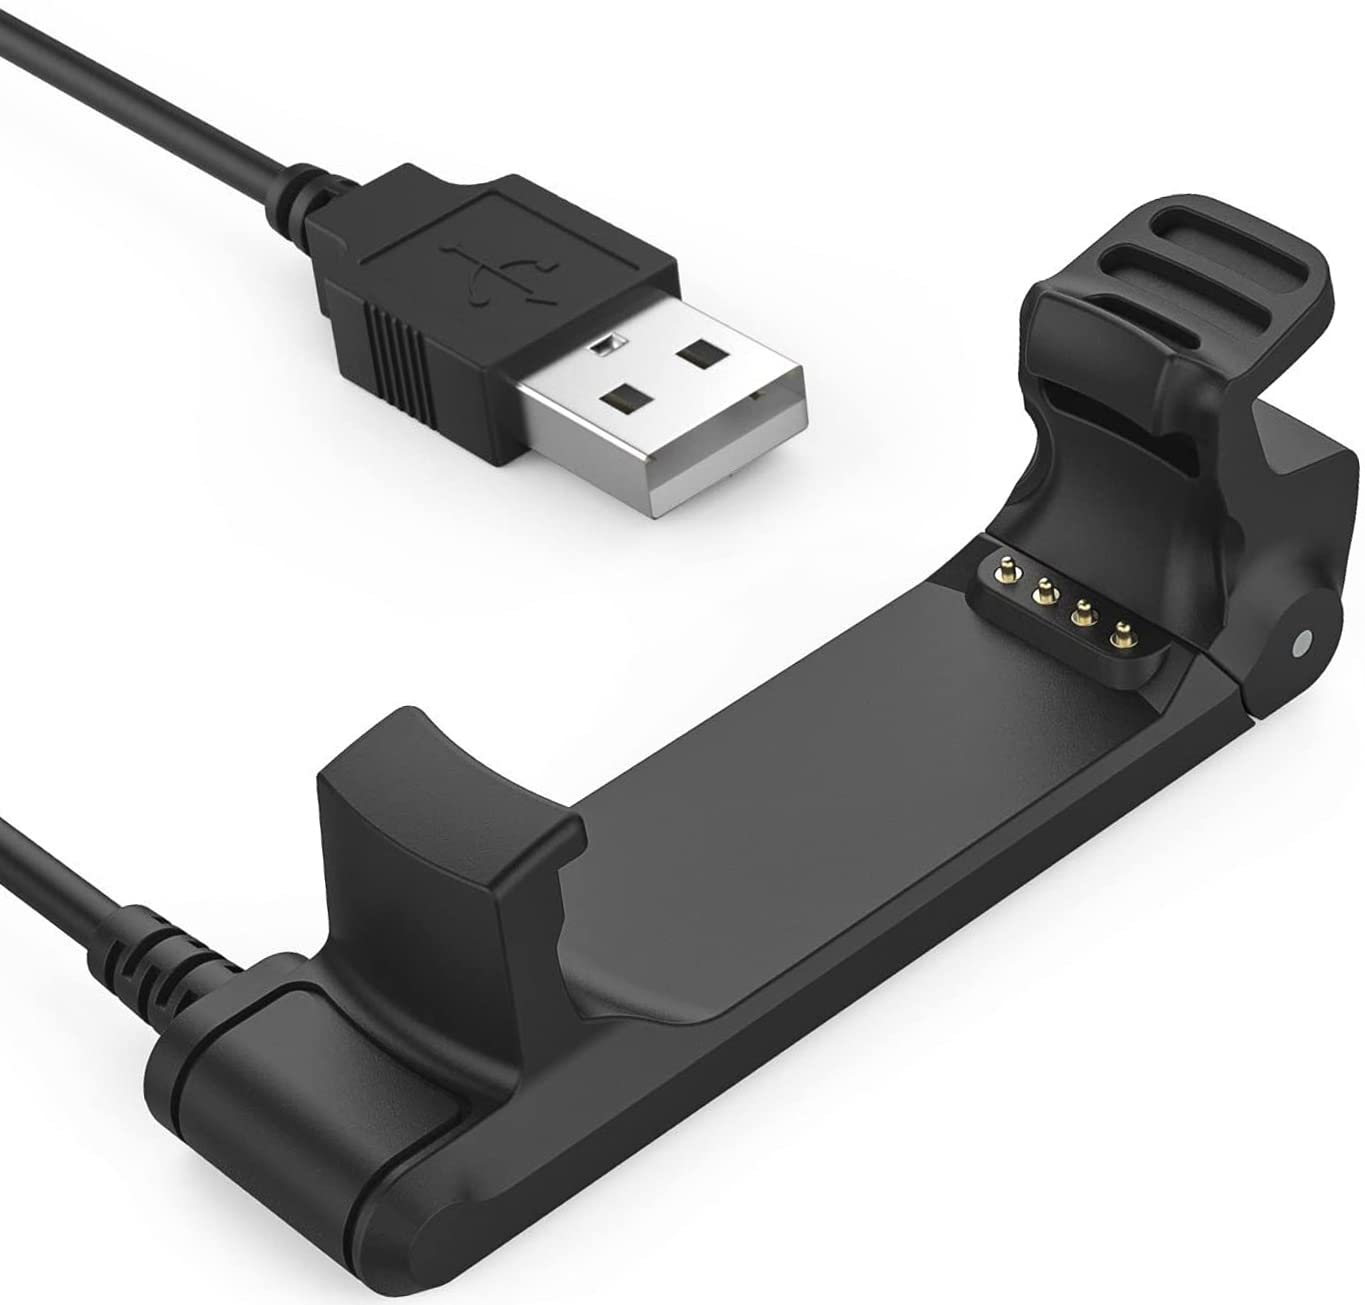 Garmin Forerunner 220 Charging USB Cable 100cm